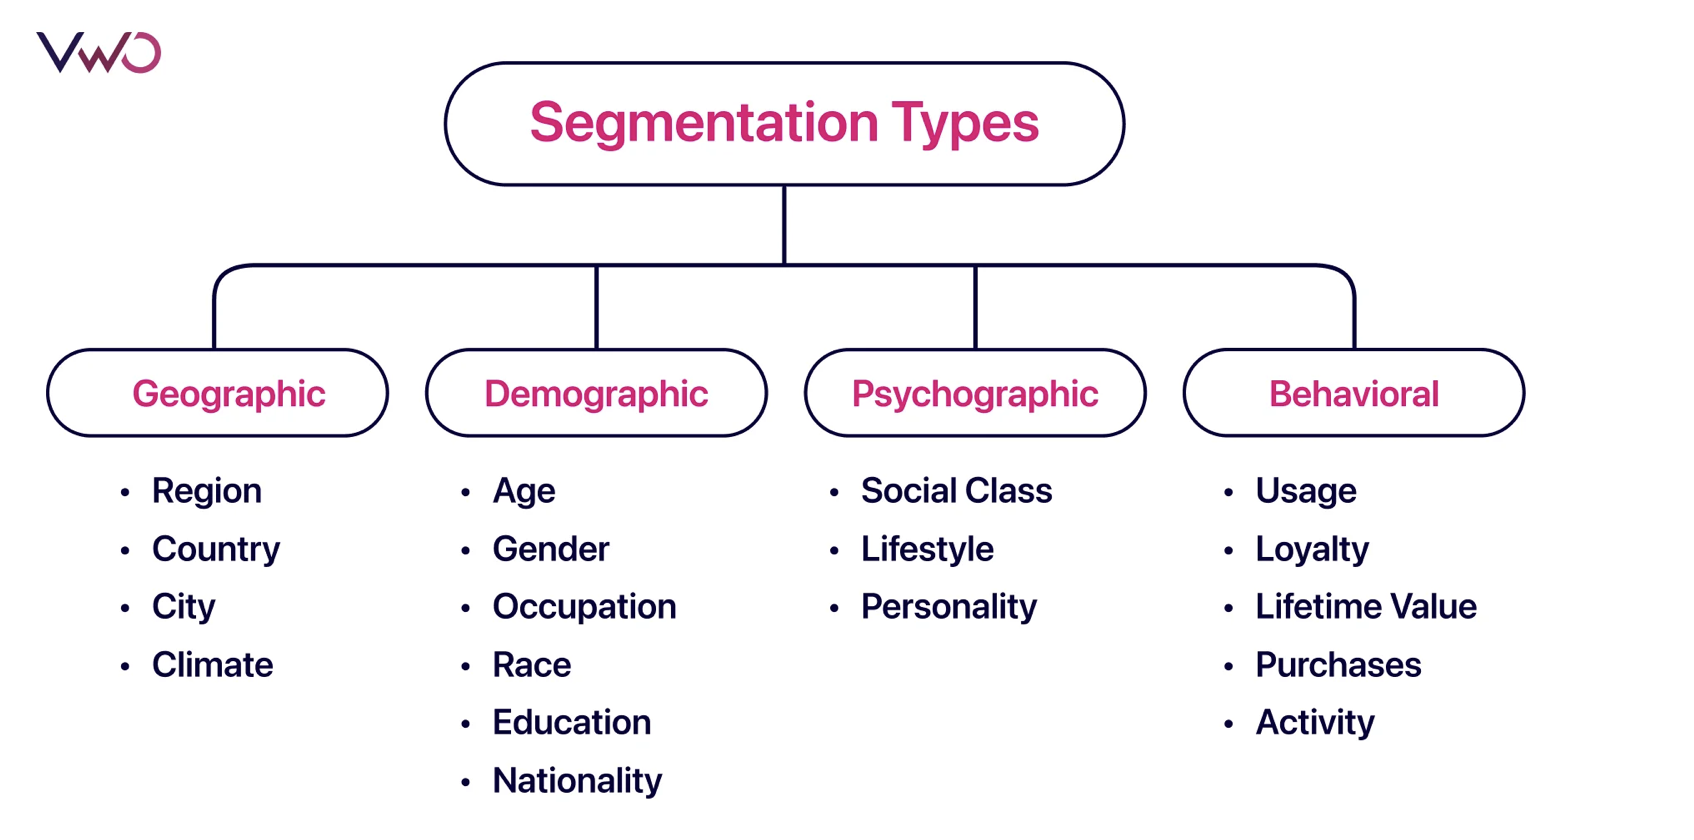 Segmentation types